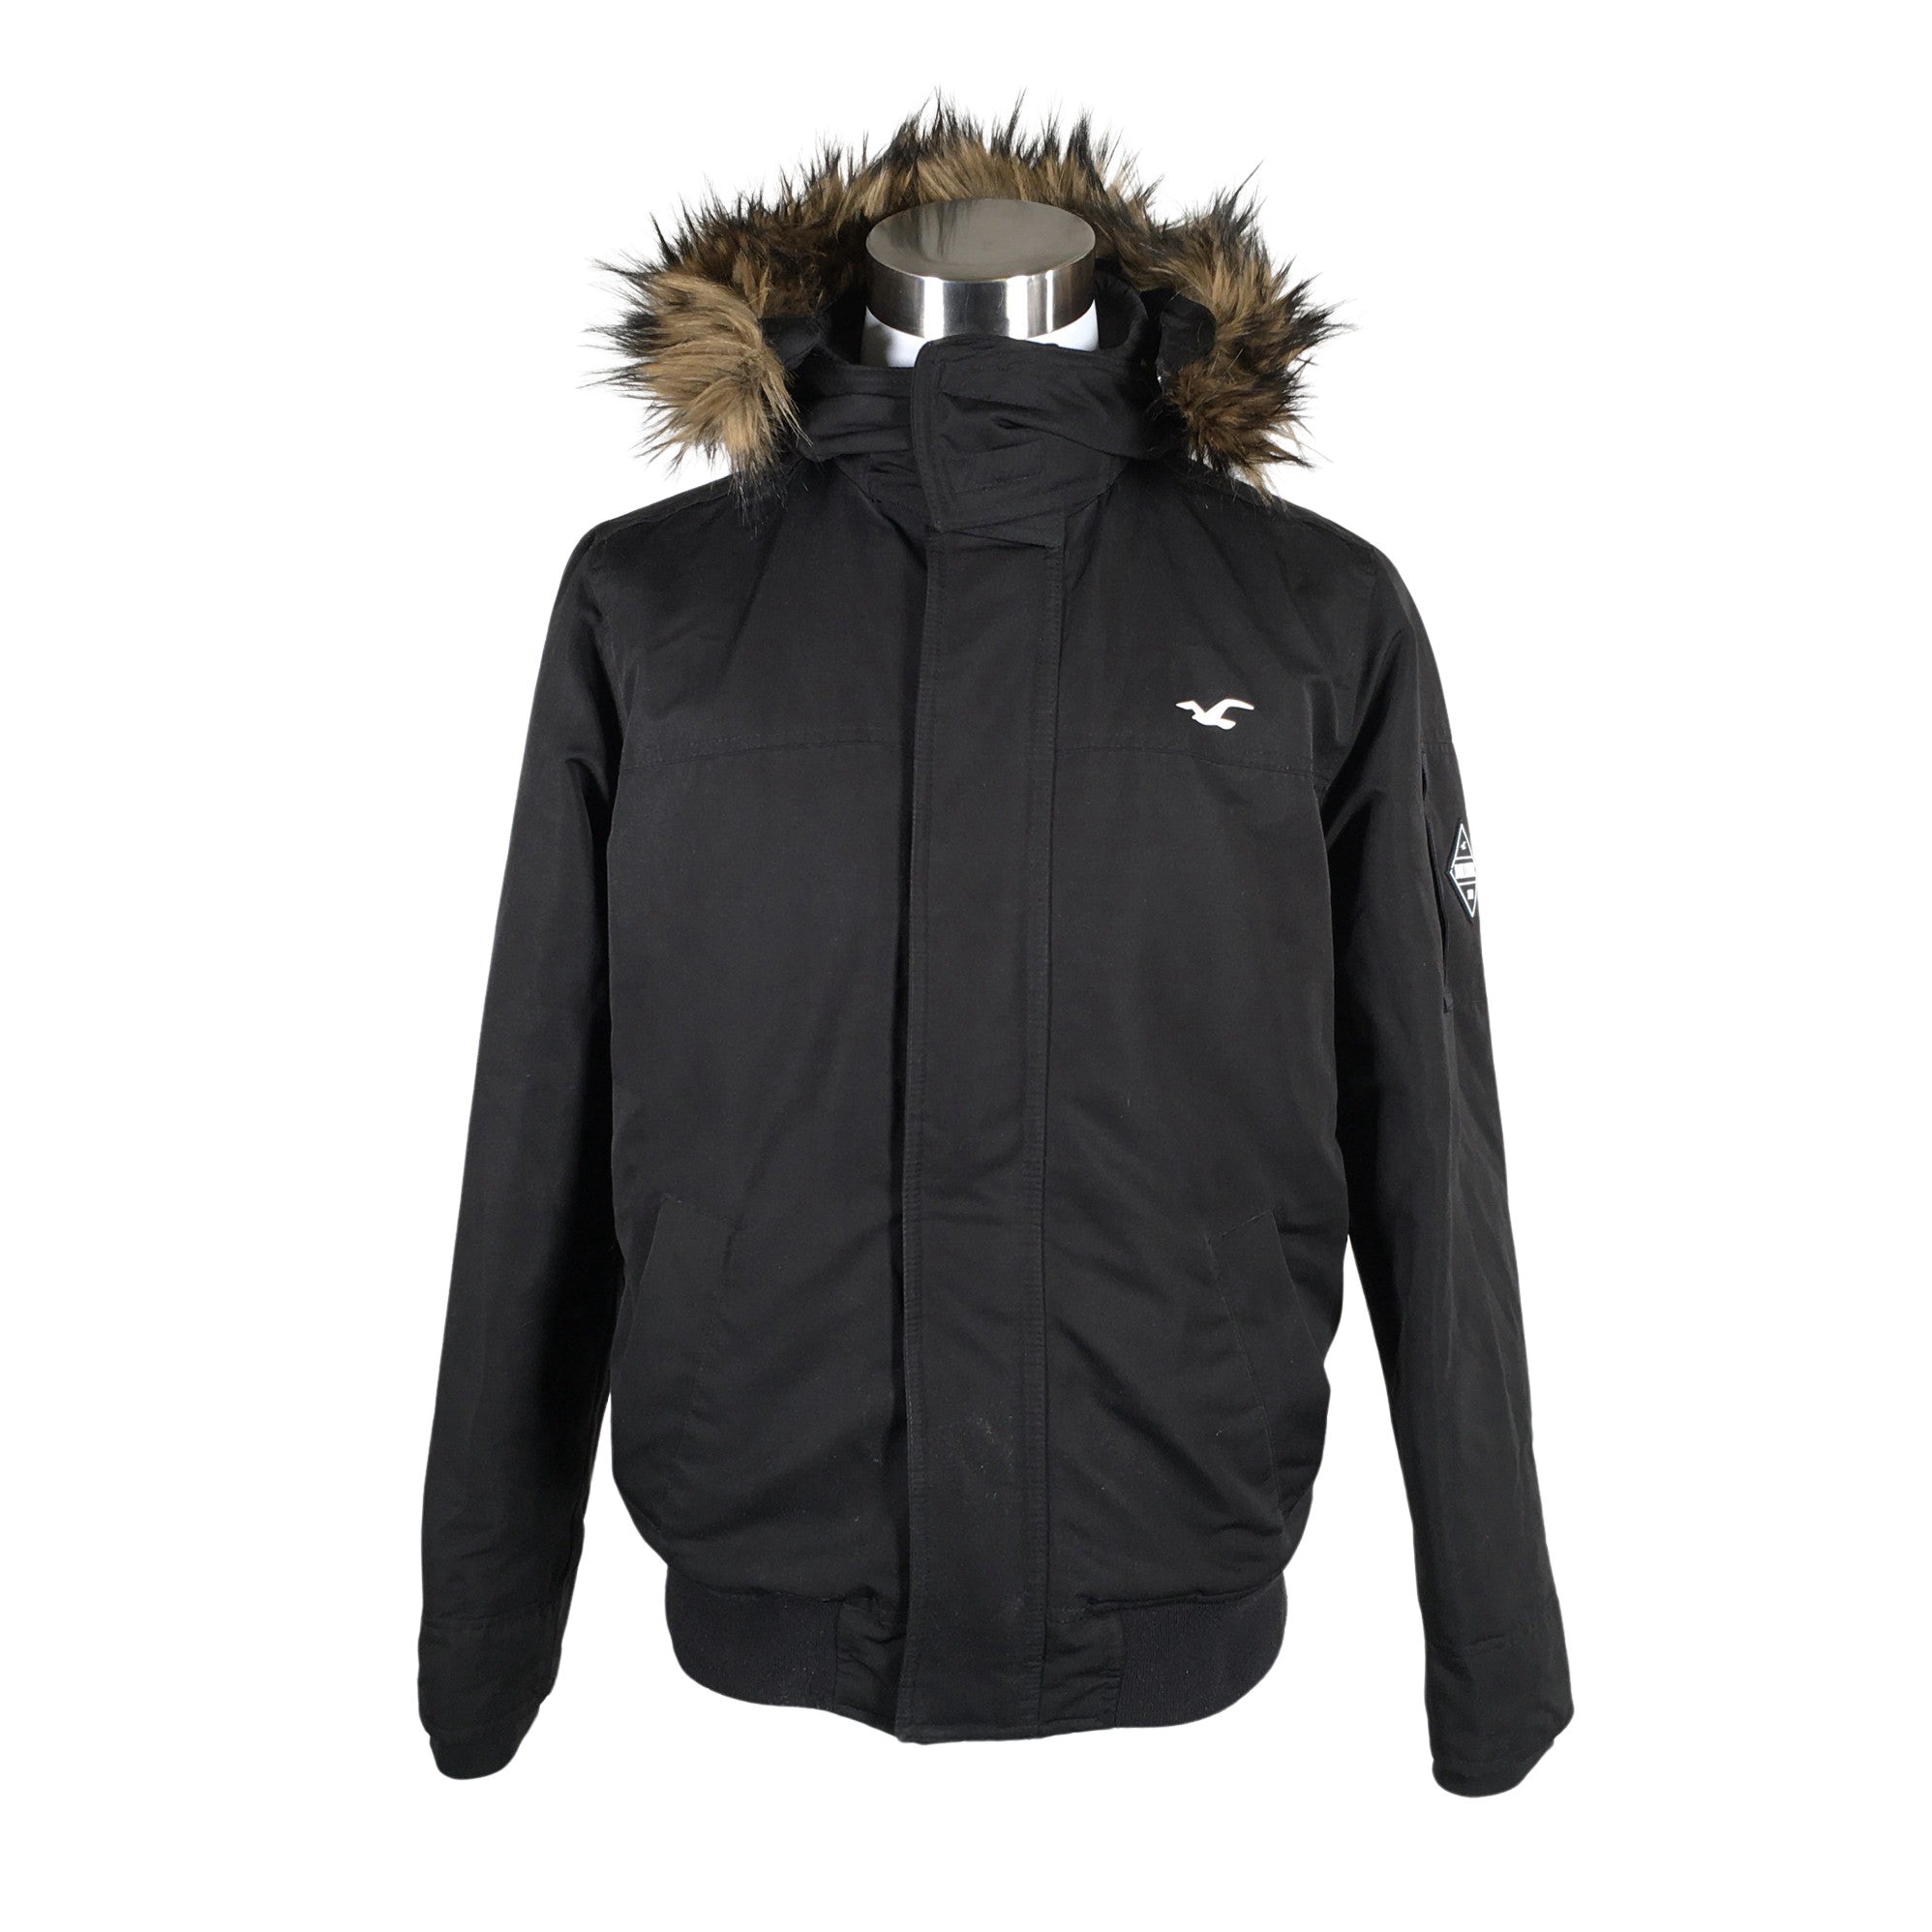 Men's Hollister Winter jacket, size M (Black)